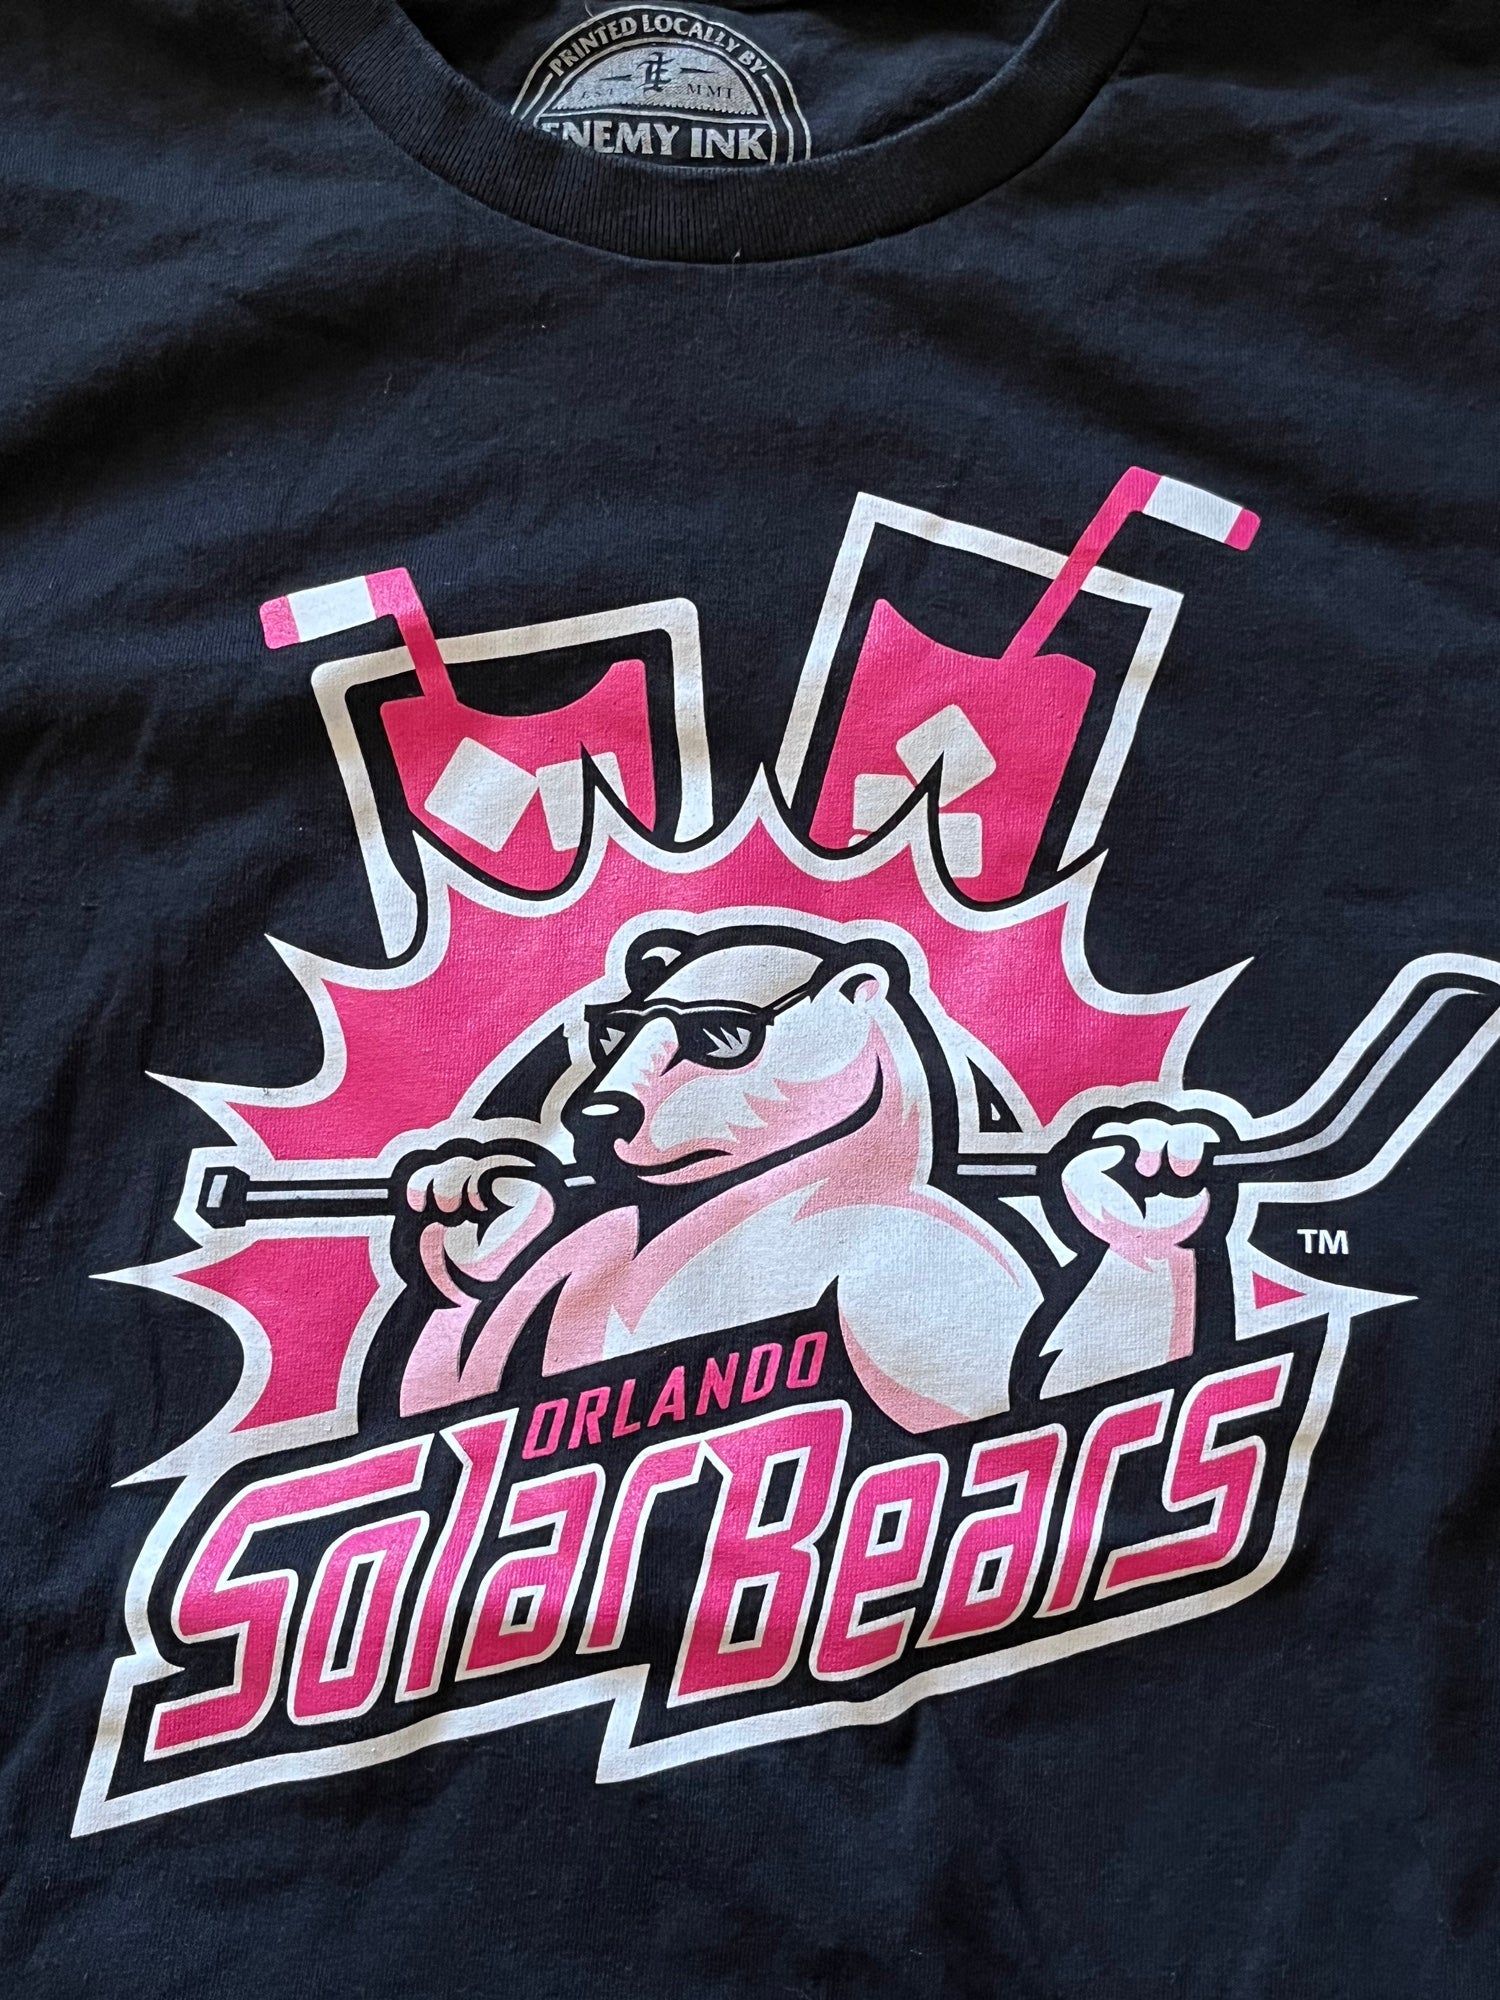 solar bears pink jersey